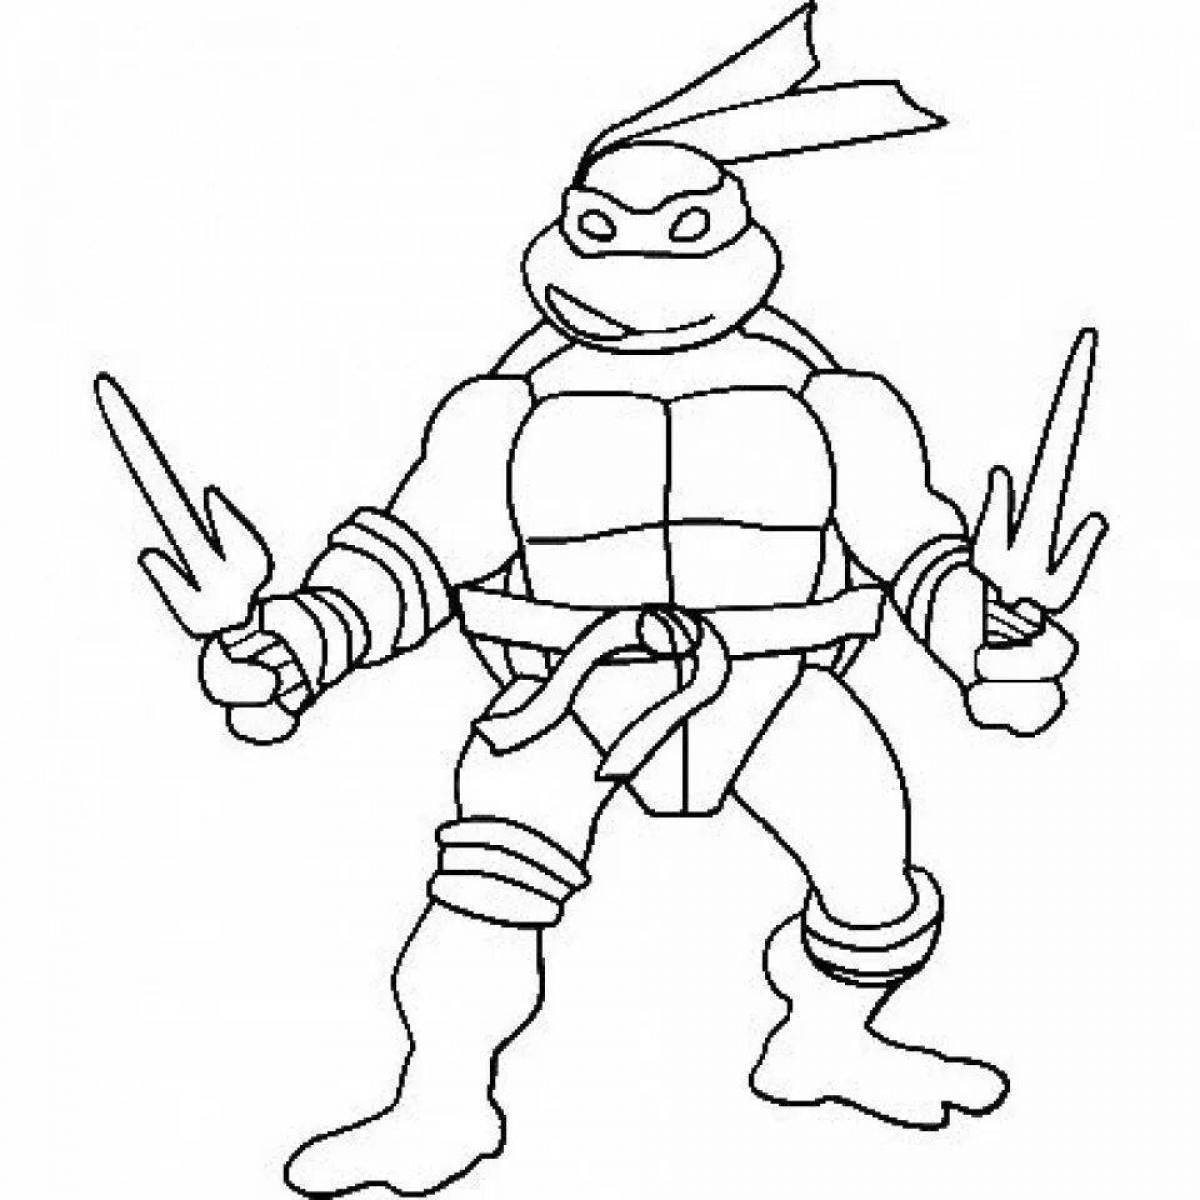 Adorable Teenage Mutant Ninja Turtle coloring book